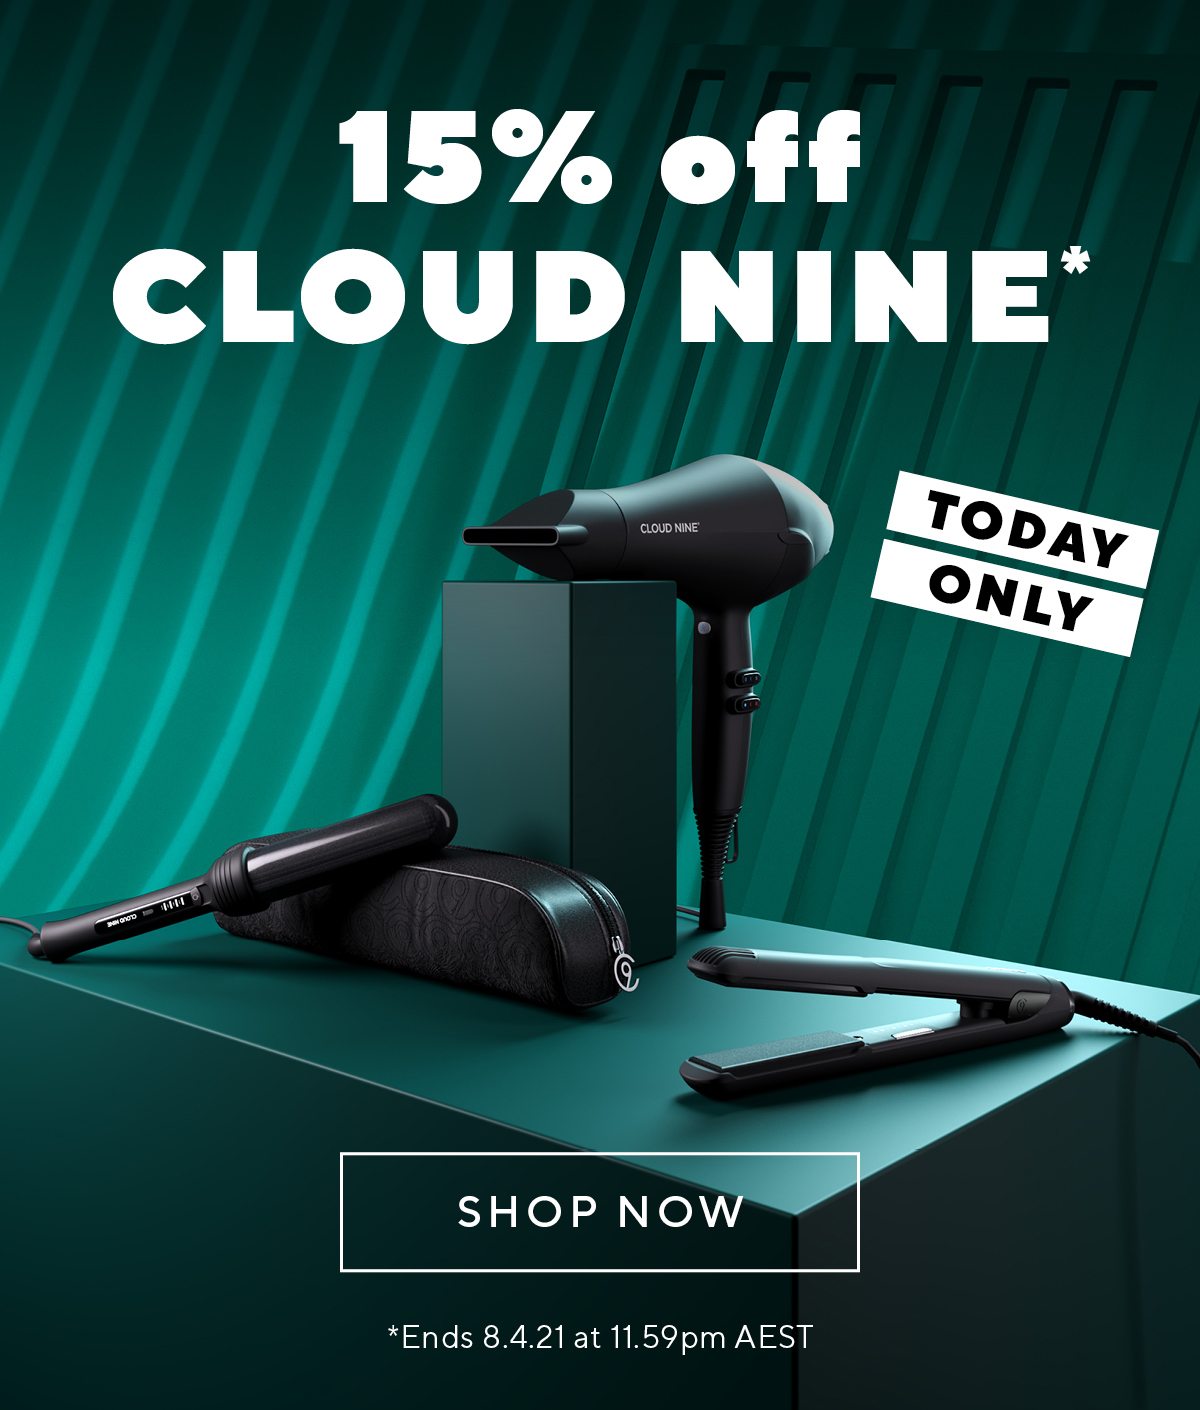 15% off Cloud Nine*